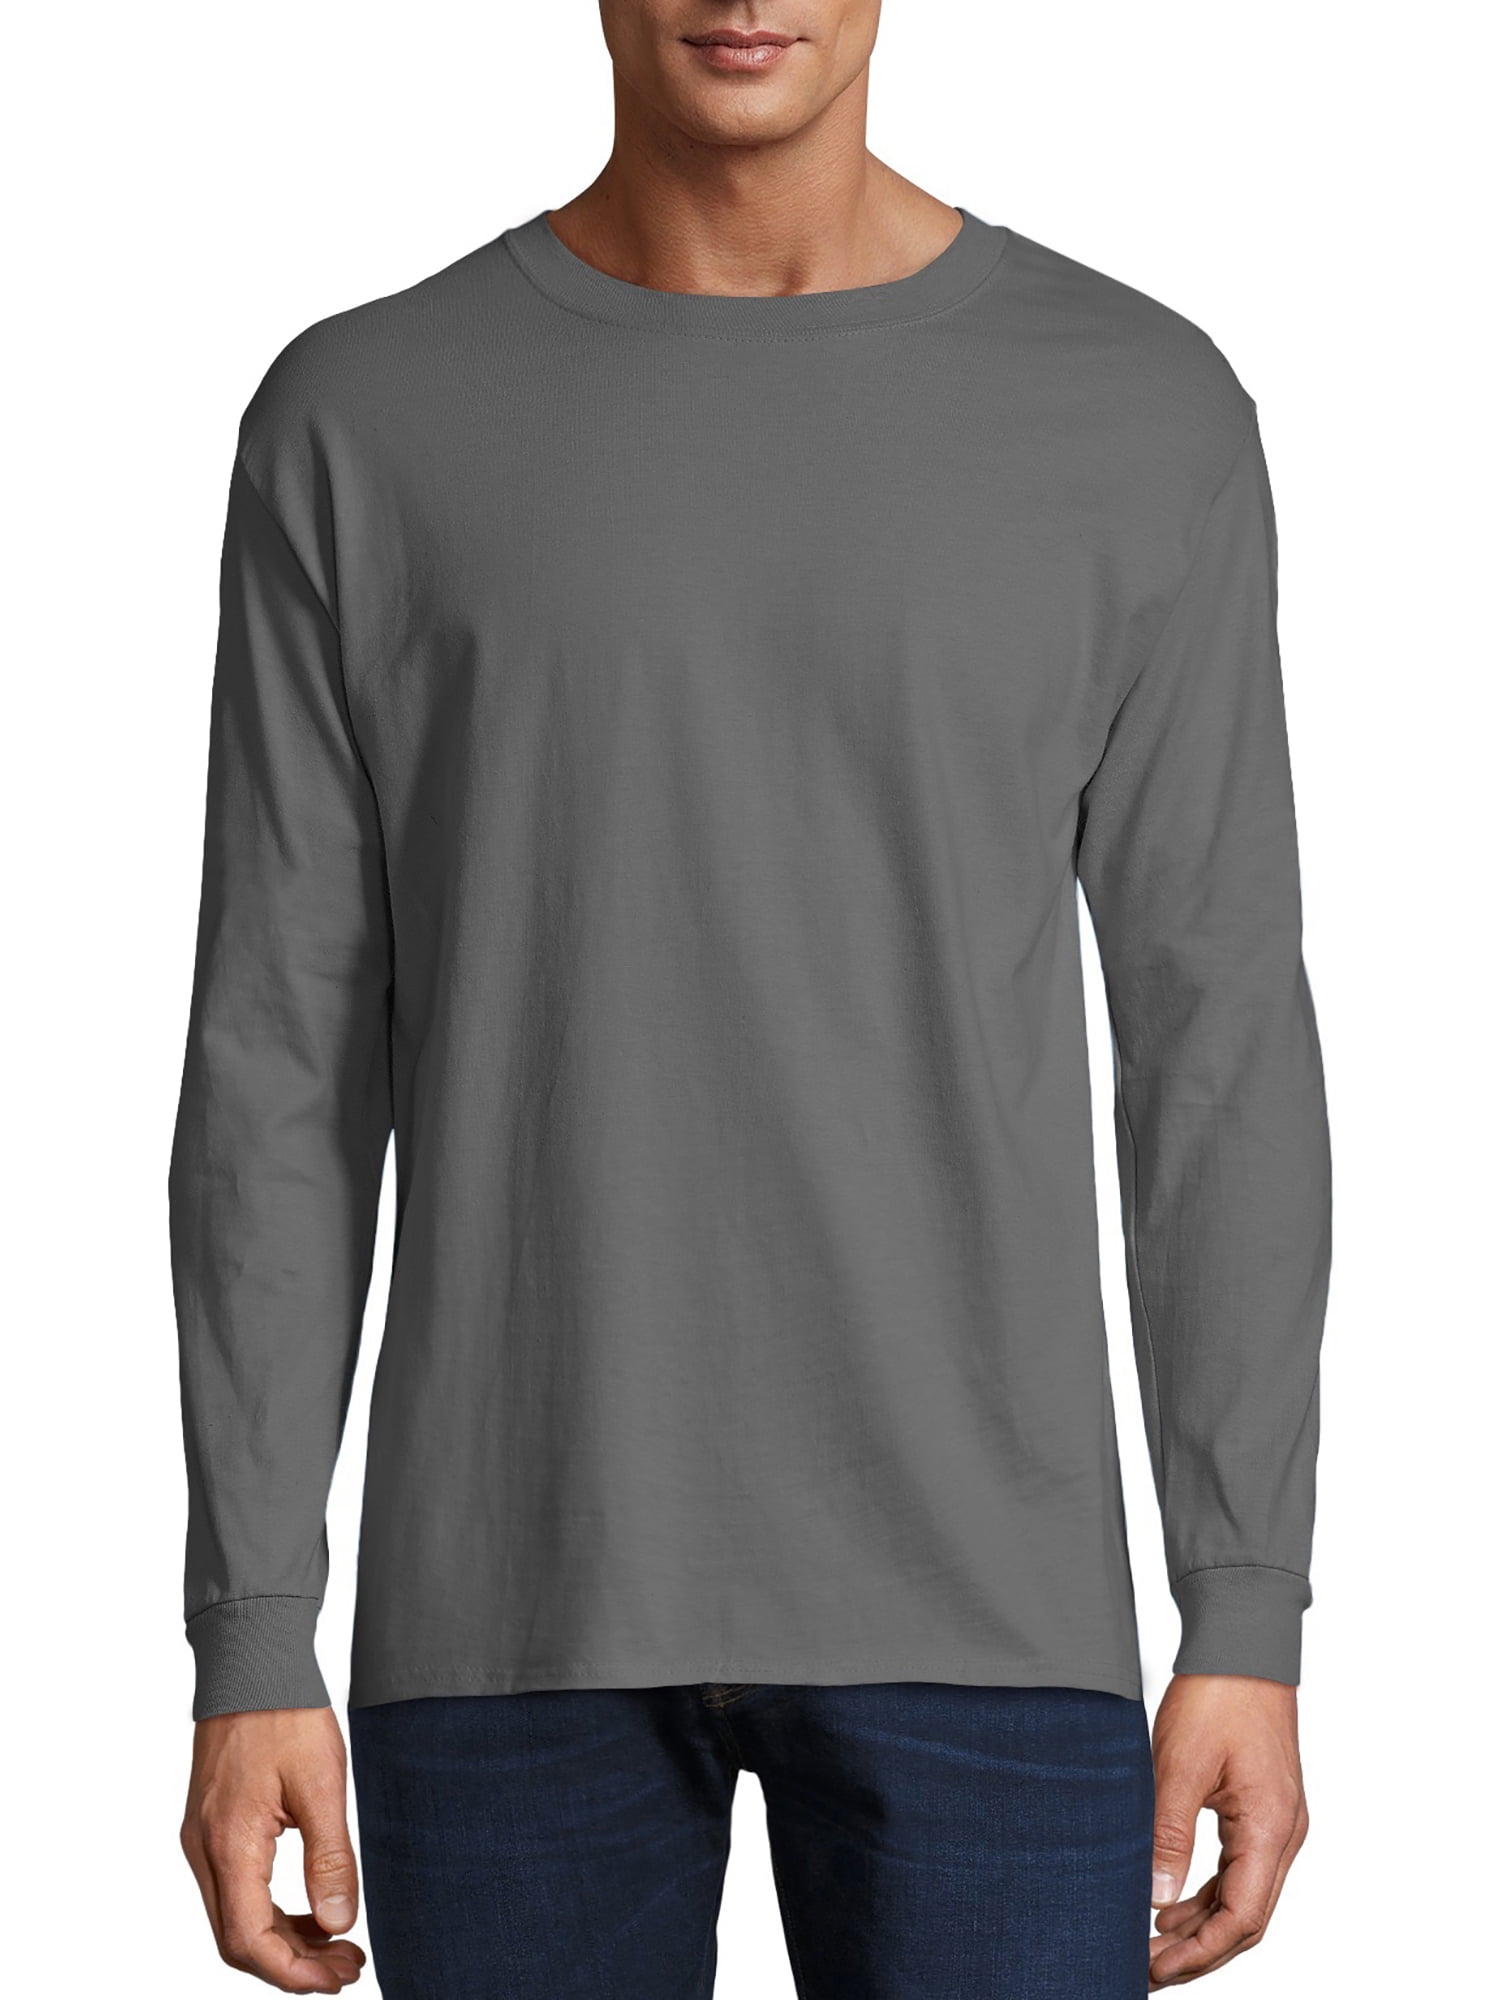 Crewneck Tops T-shirt Long Sleeve Pullover Slim Cotton Fashion shirt  warm WST